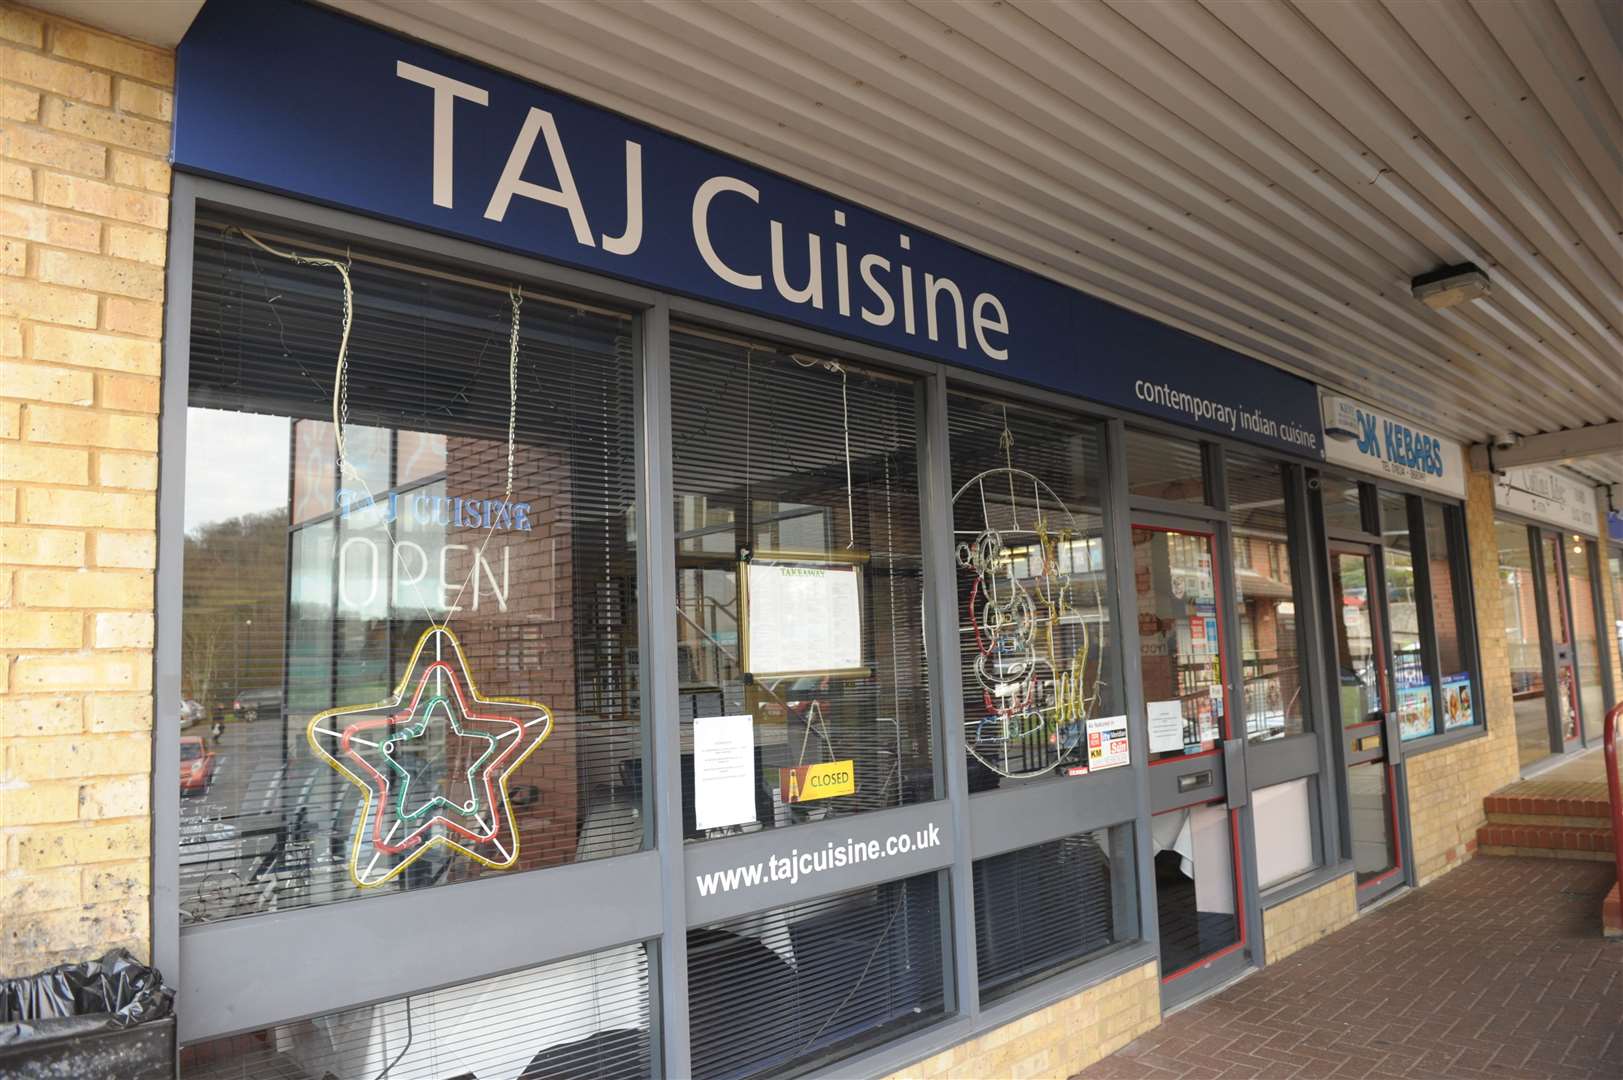 Taj Cuisine in Chatham. Picture: Steve Crispe